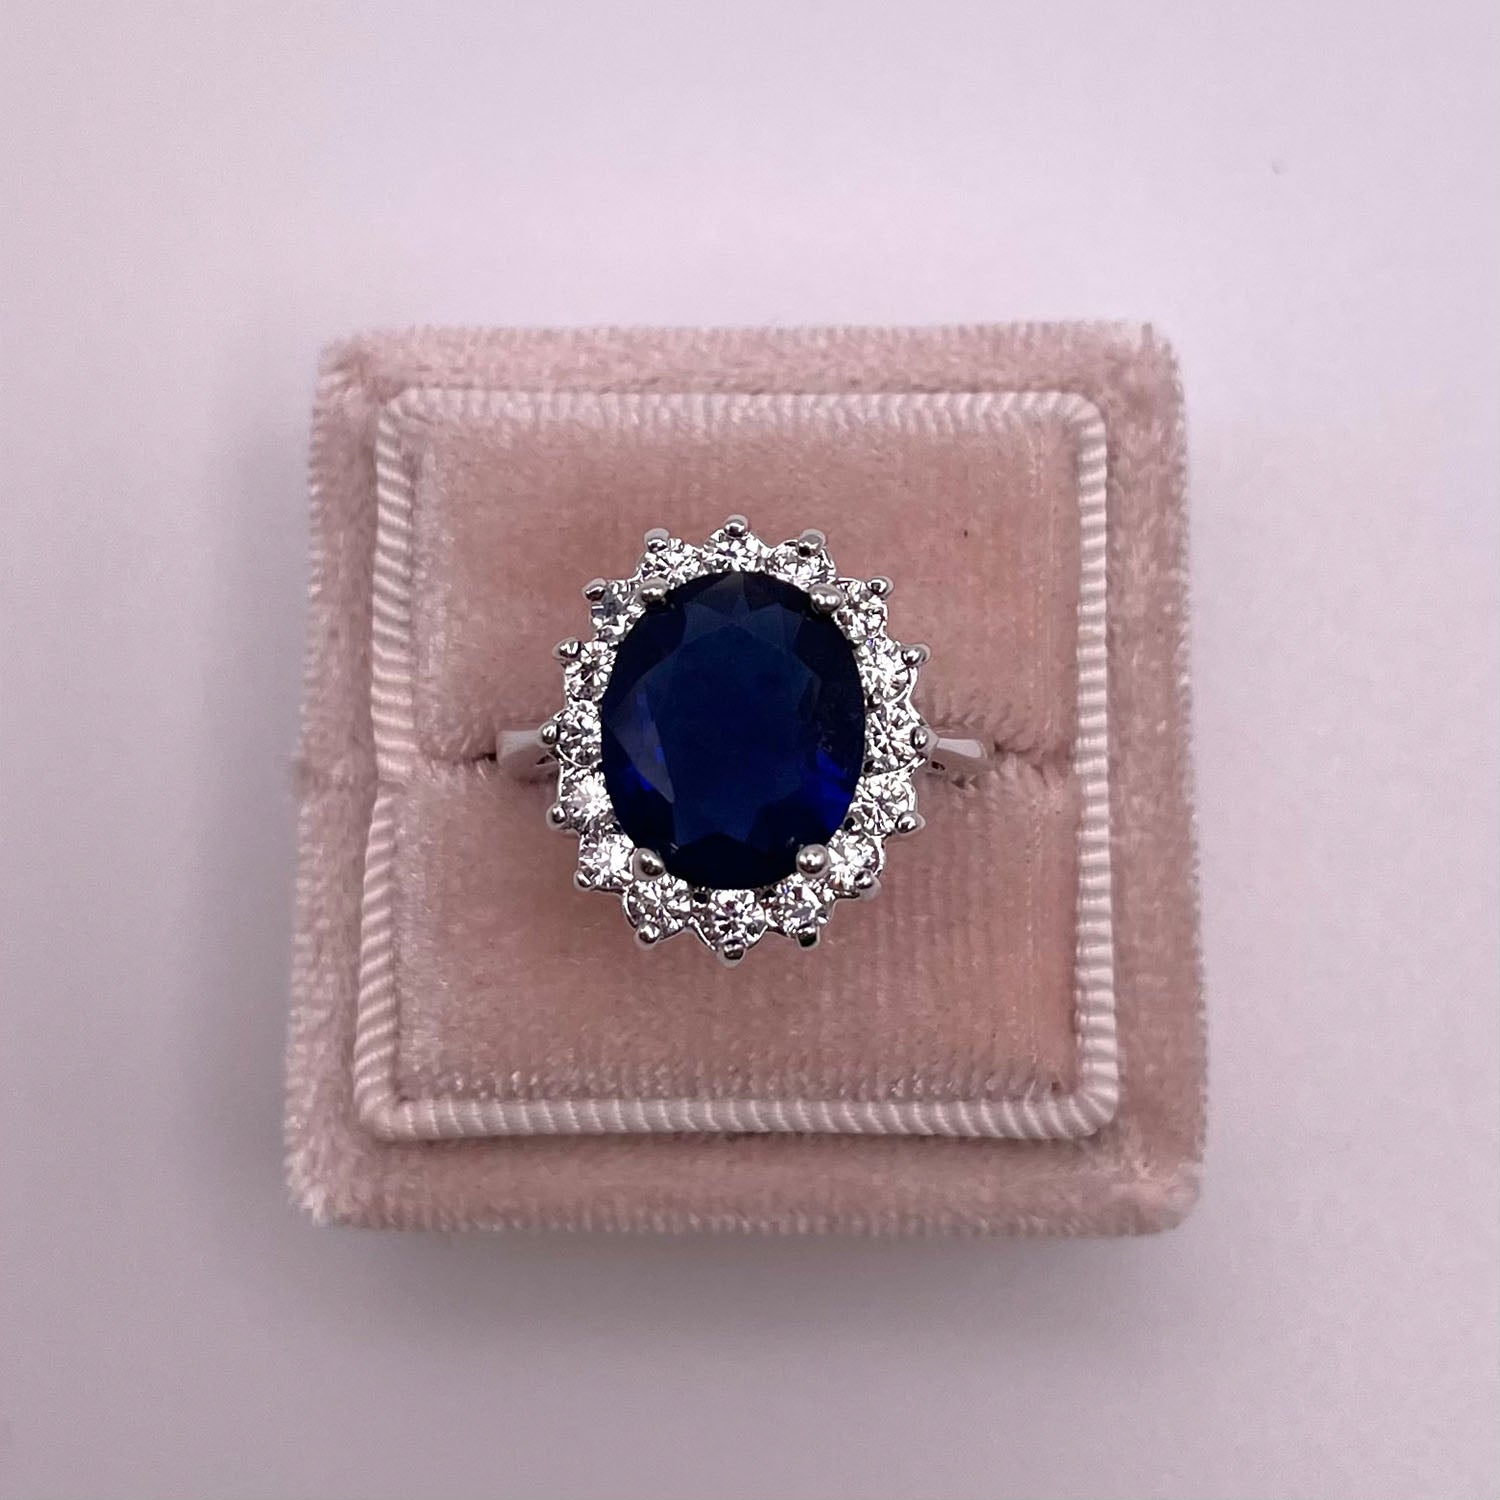 Isla 5 Ct. Oval Cut CZ Sapphire Ring, Silver - Zahra Jewelry